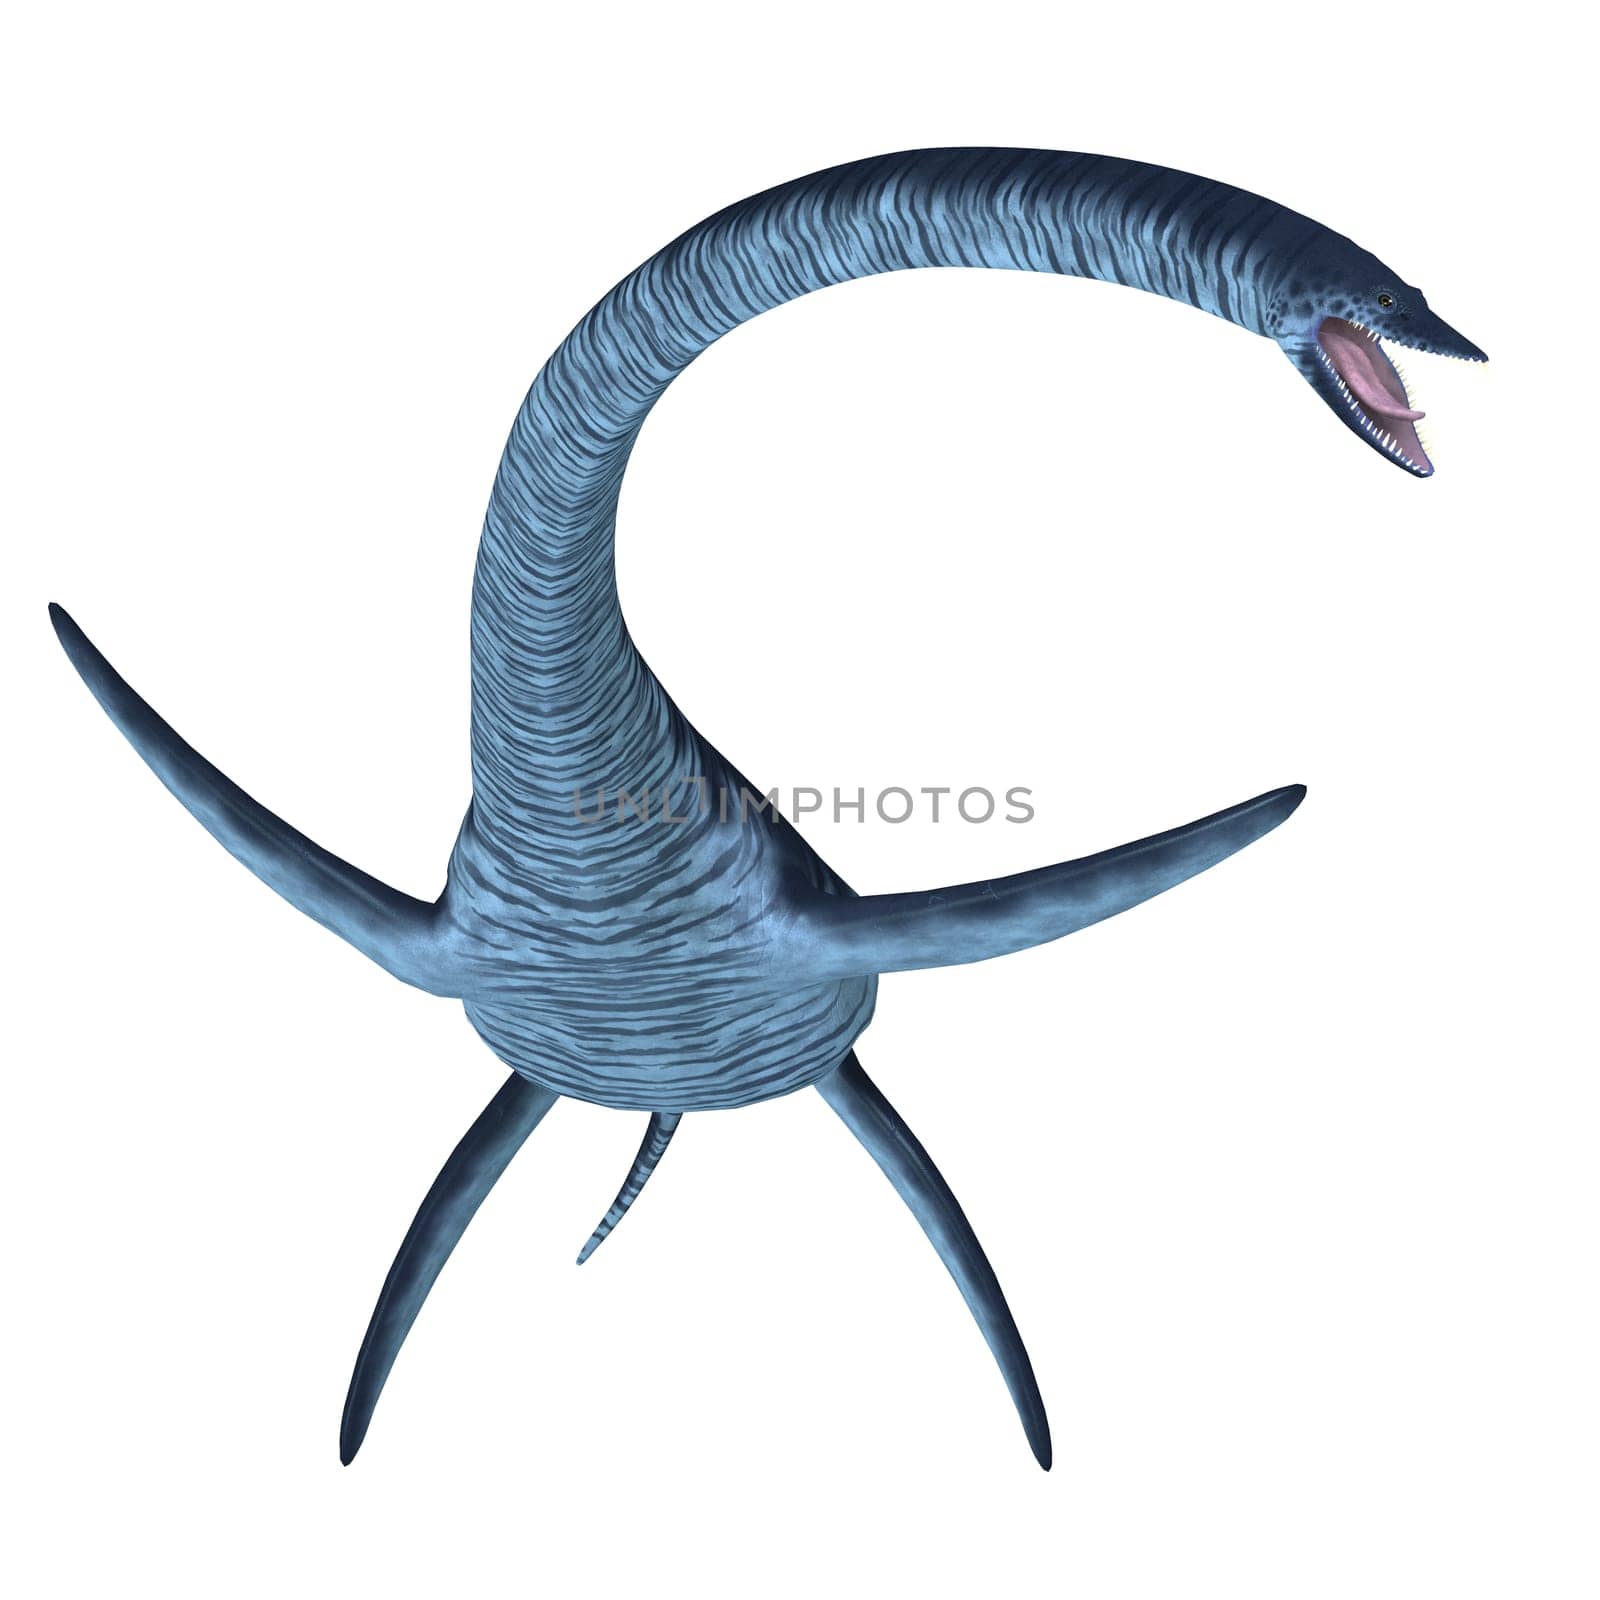 Elasmosaurus Plesiosaur by Catmando